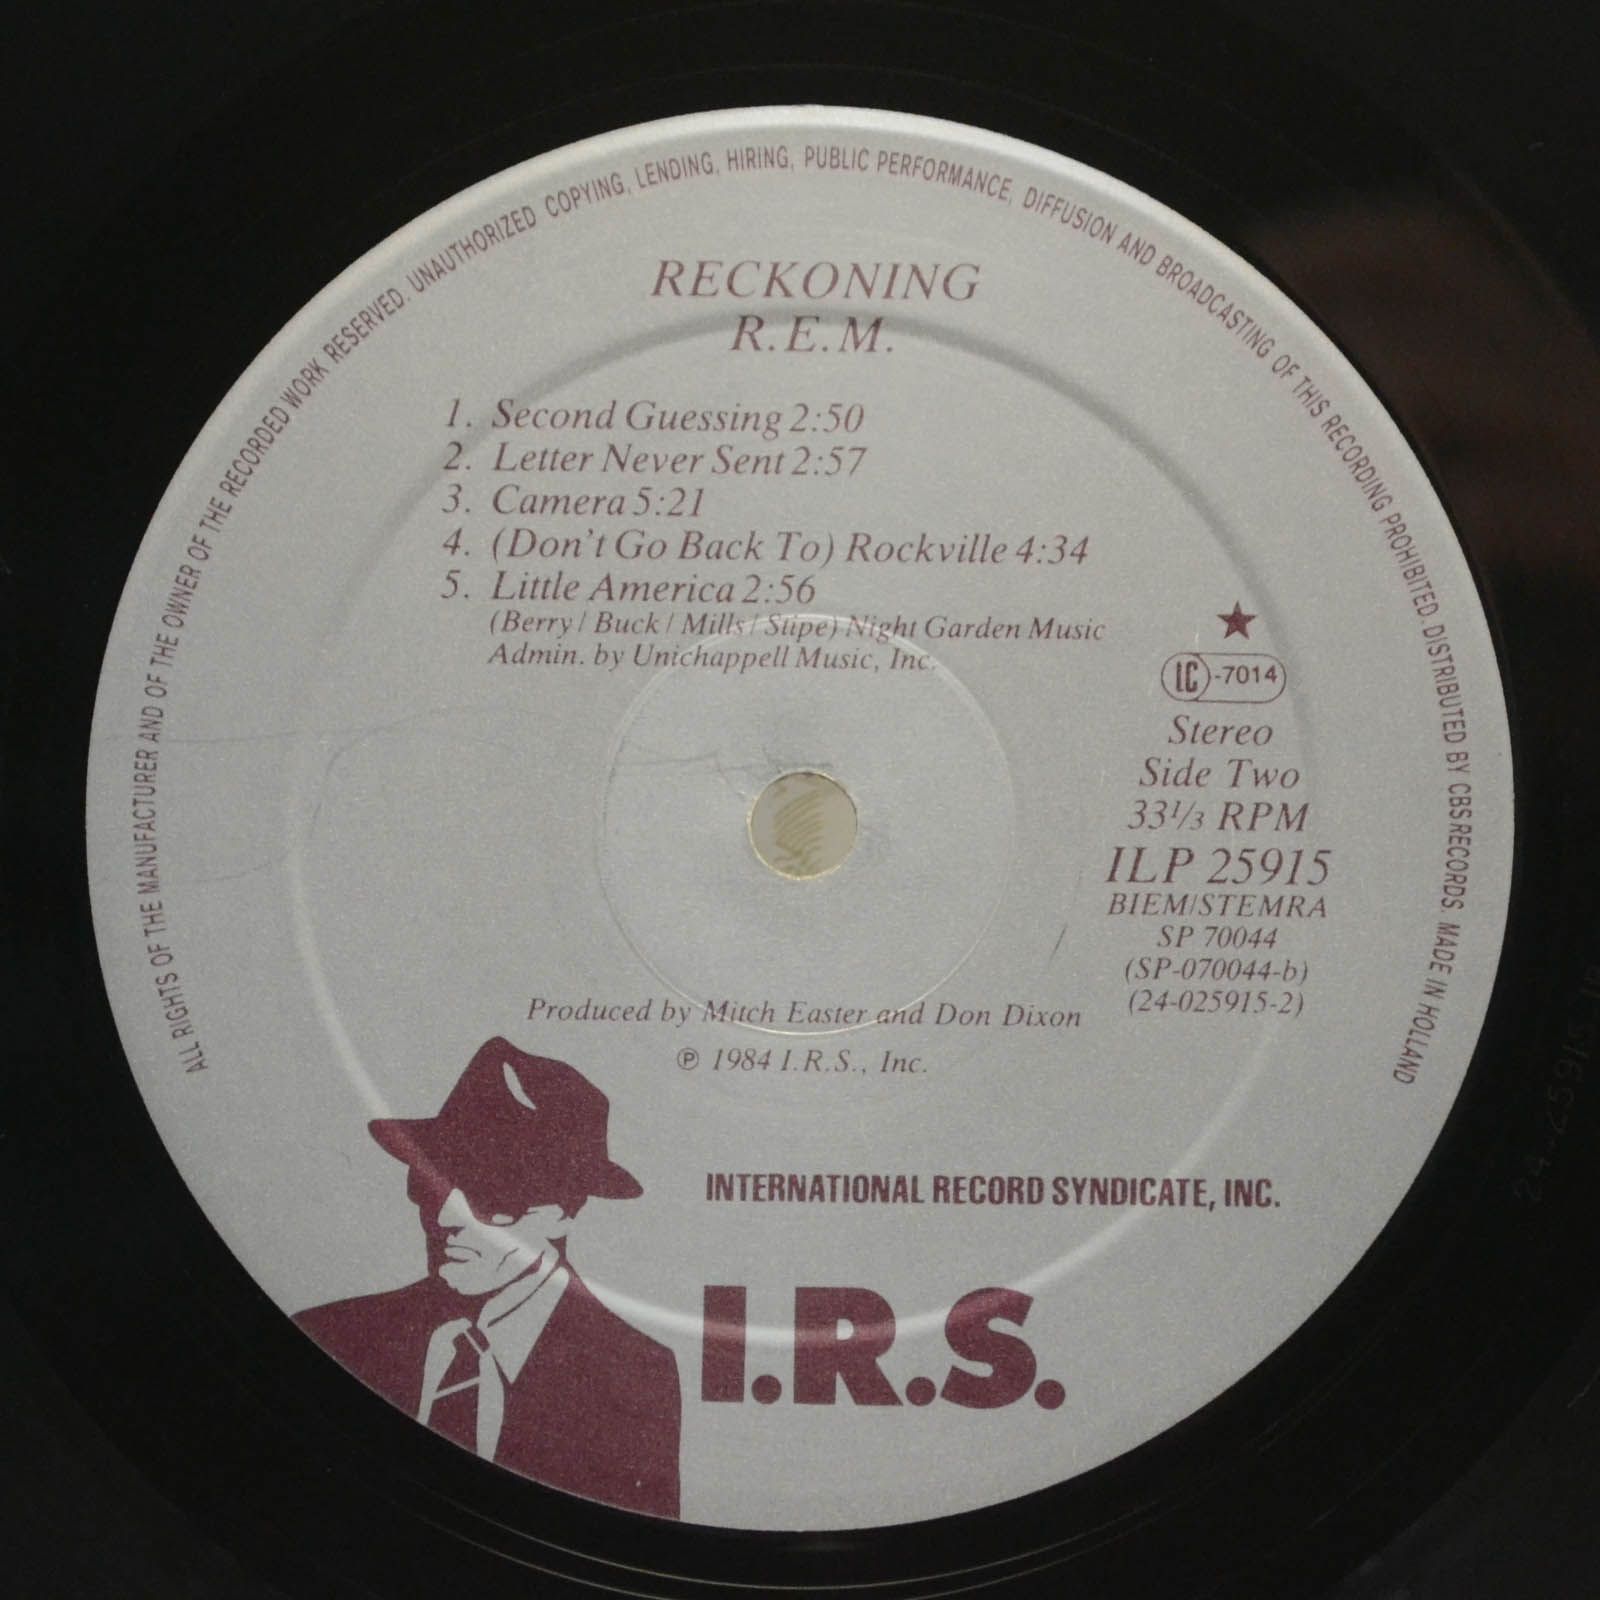 R.E.M. — Reckoning, 1984